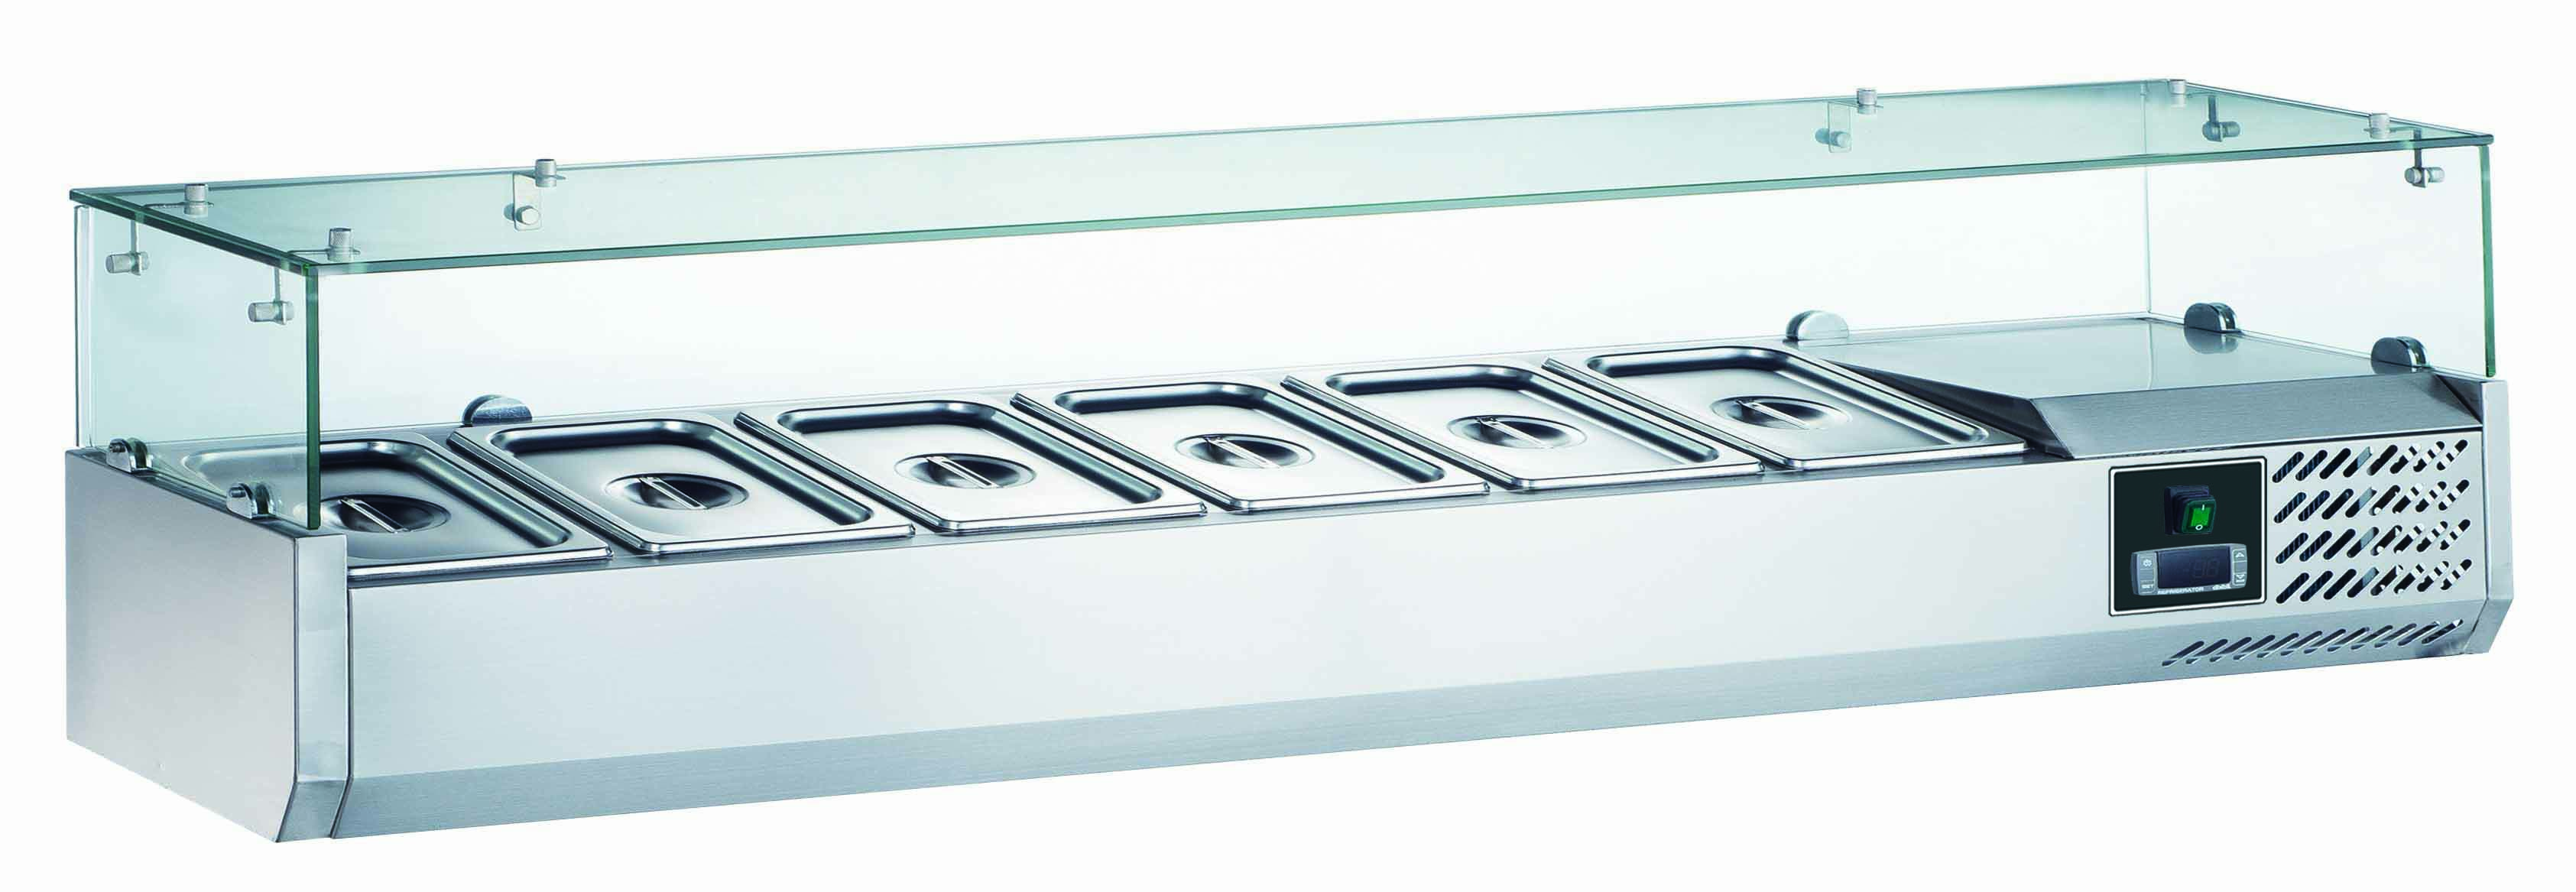 Vitrine réfrigérée de table modèle EVRX 1500/380